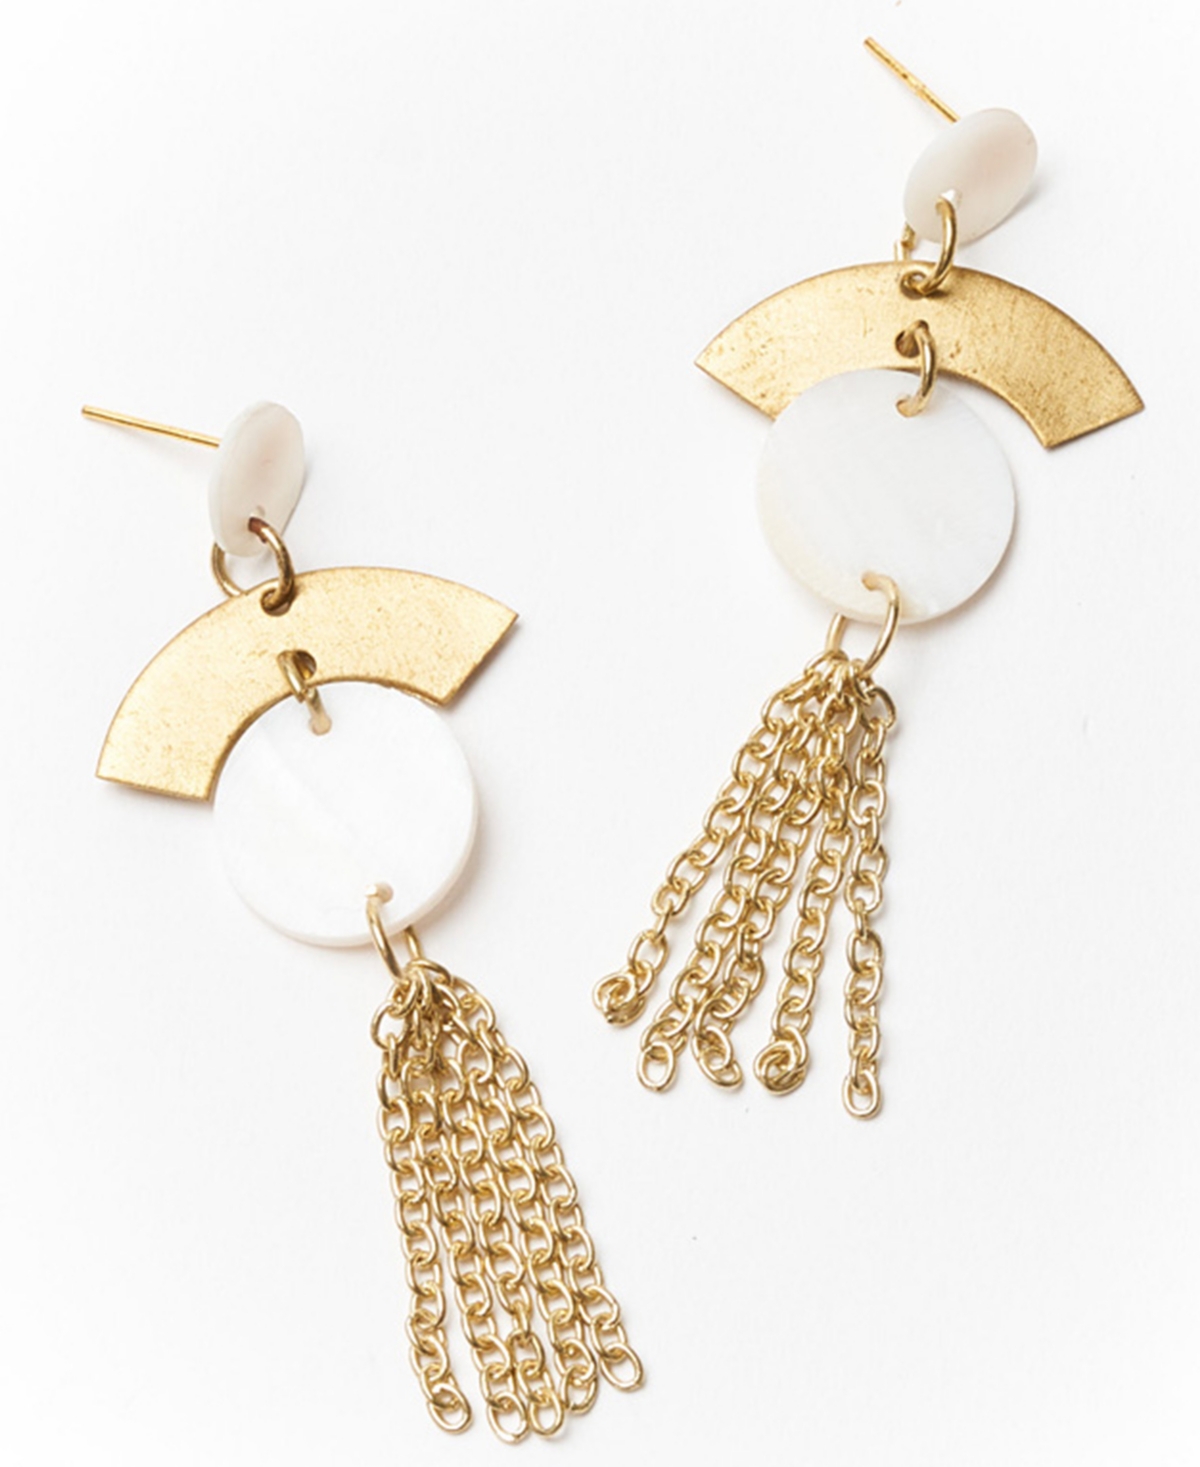 Matr Boomie Gold-Tone Tassel Earrings